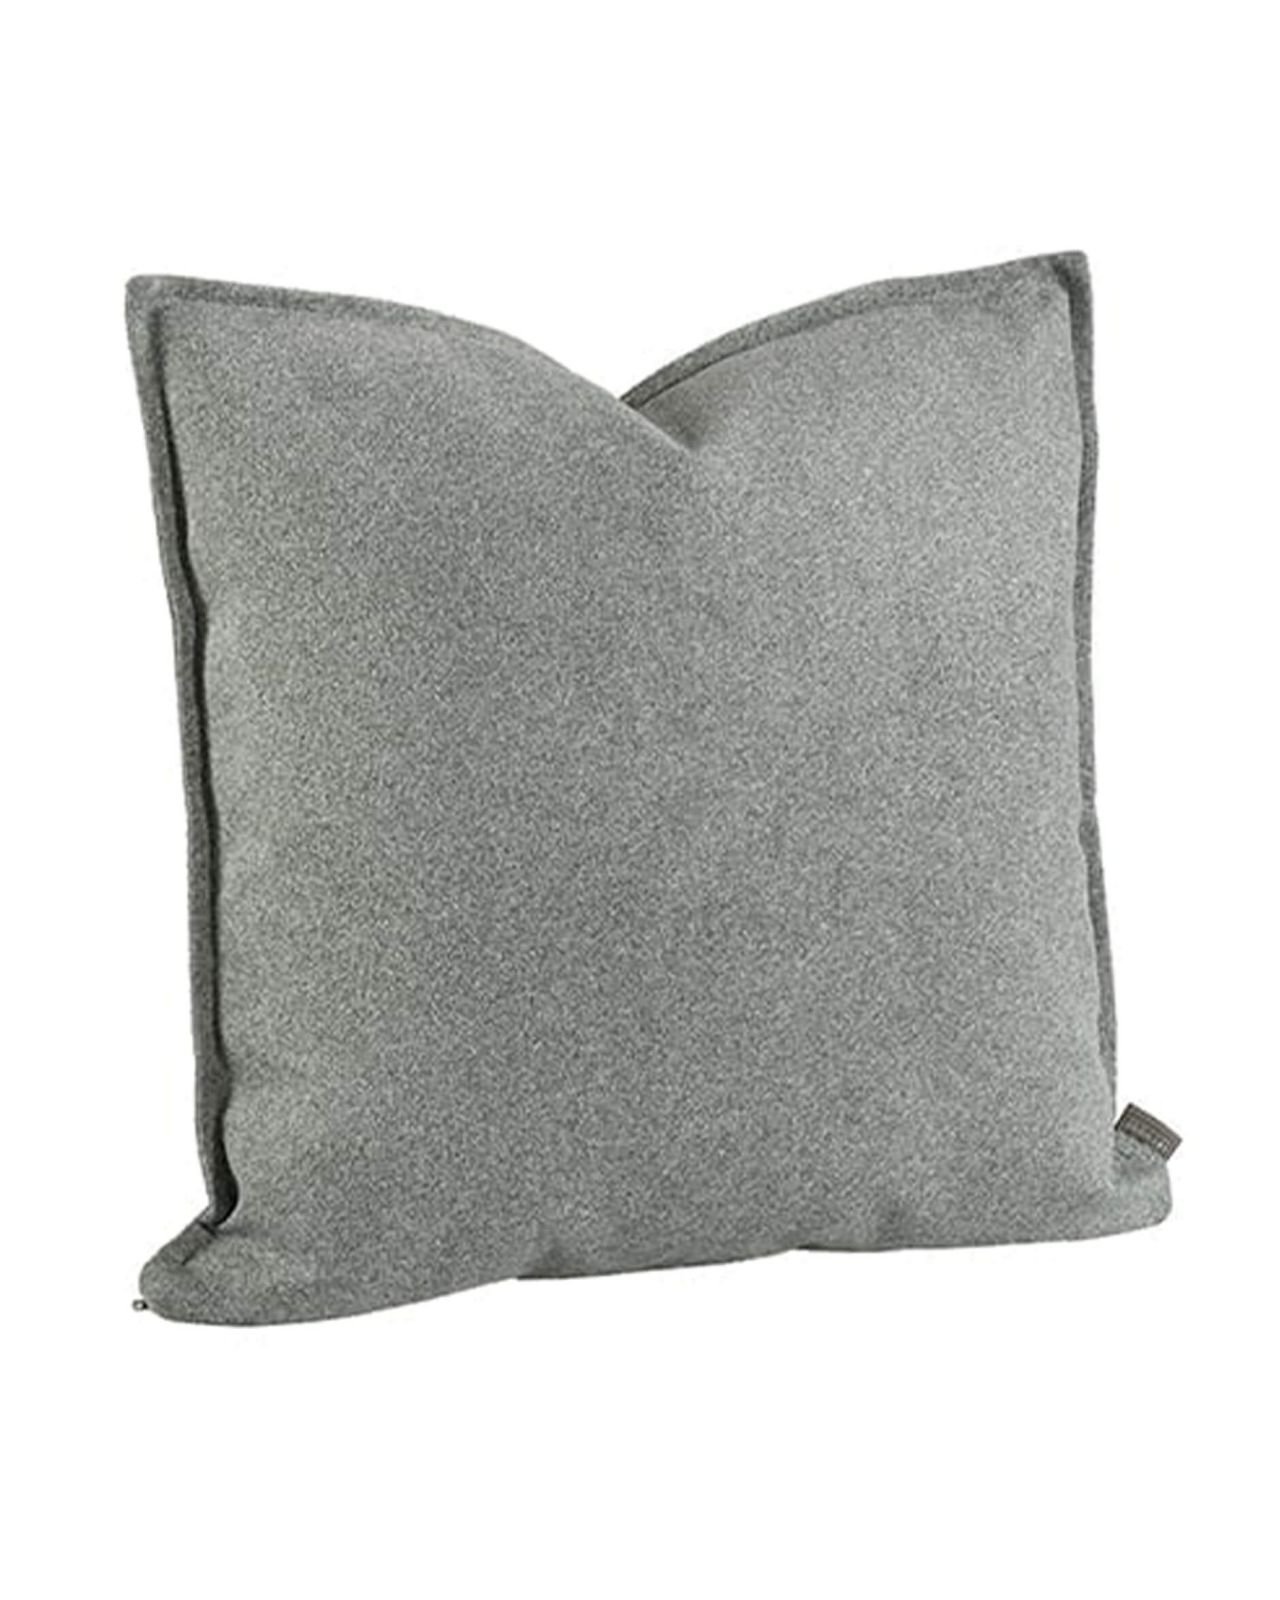 Fares cushion cover gray